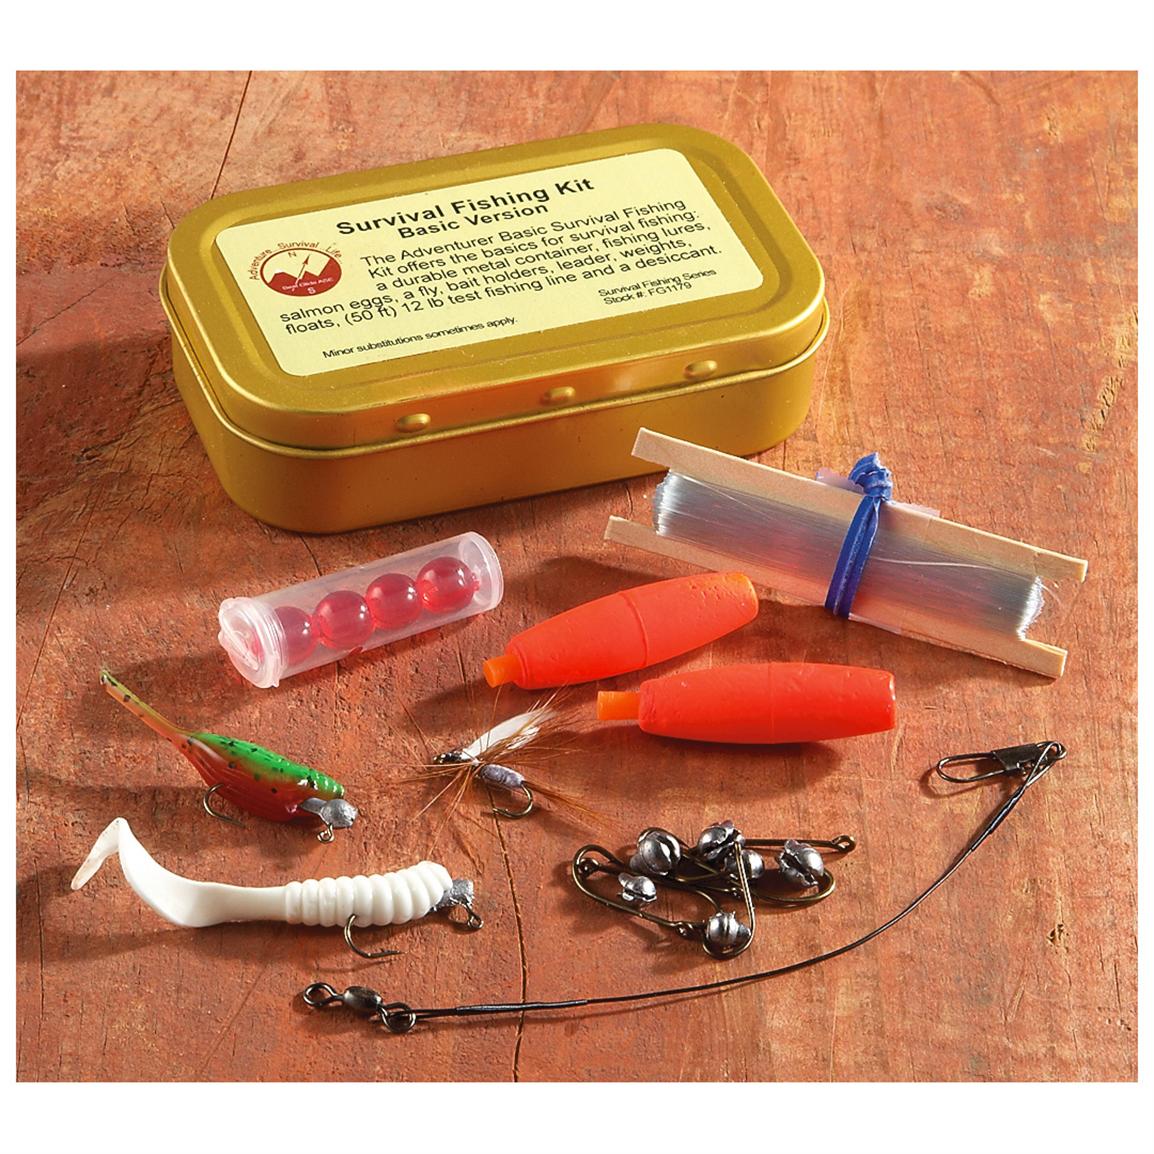 15Pc. Emergency Survival Fishing Kit 420949, Survival